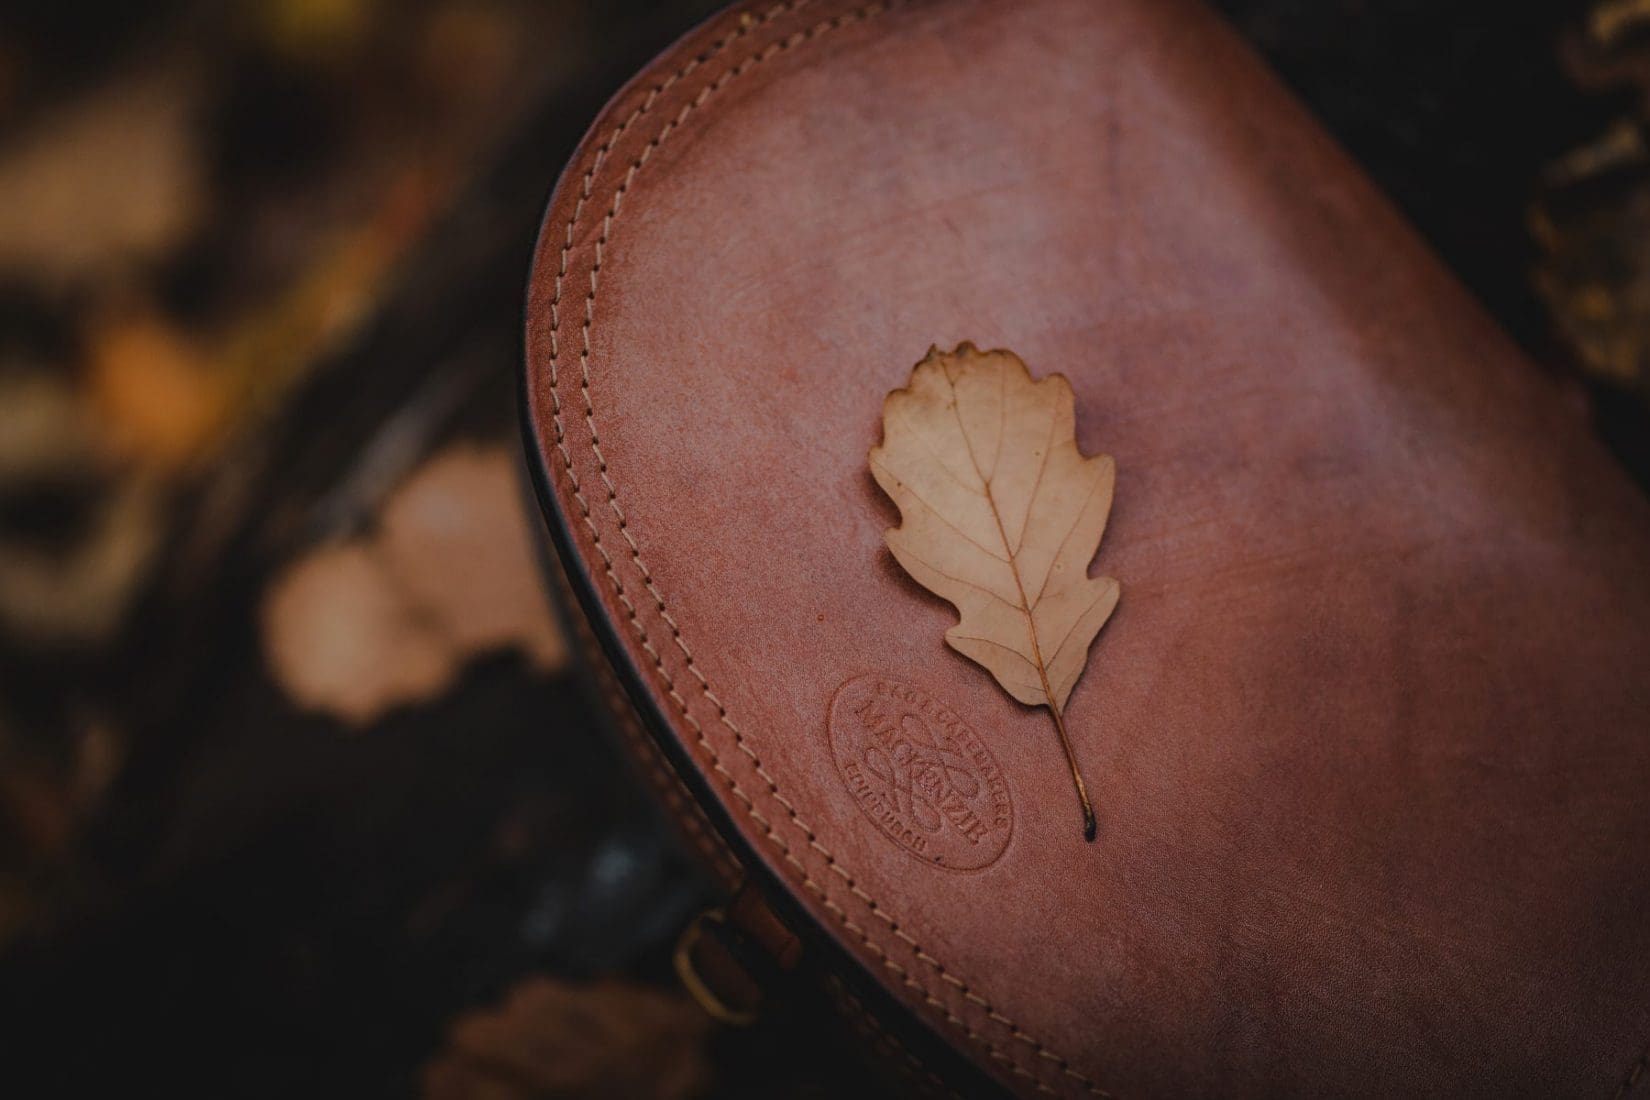 Leather Shoulder Cartridge Oak bag in British Oak hide brown colour, handmade by Mackenzie Leather Edinburgh.